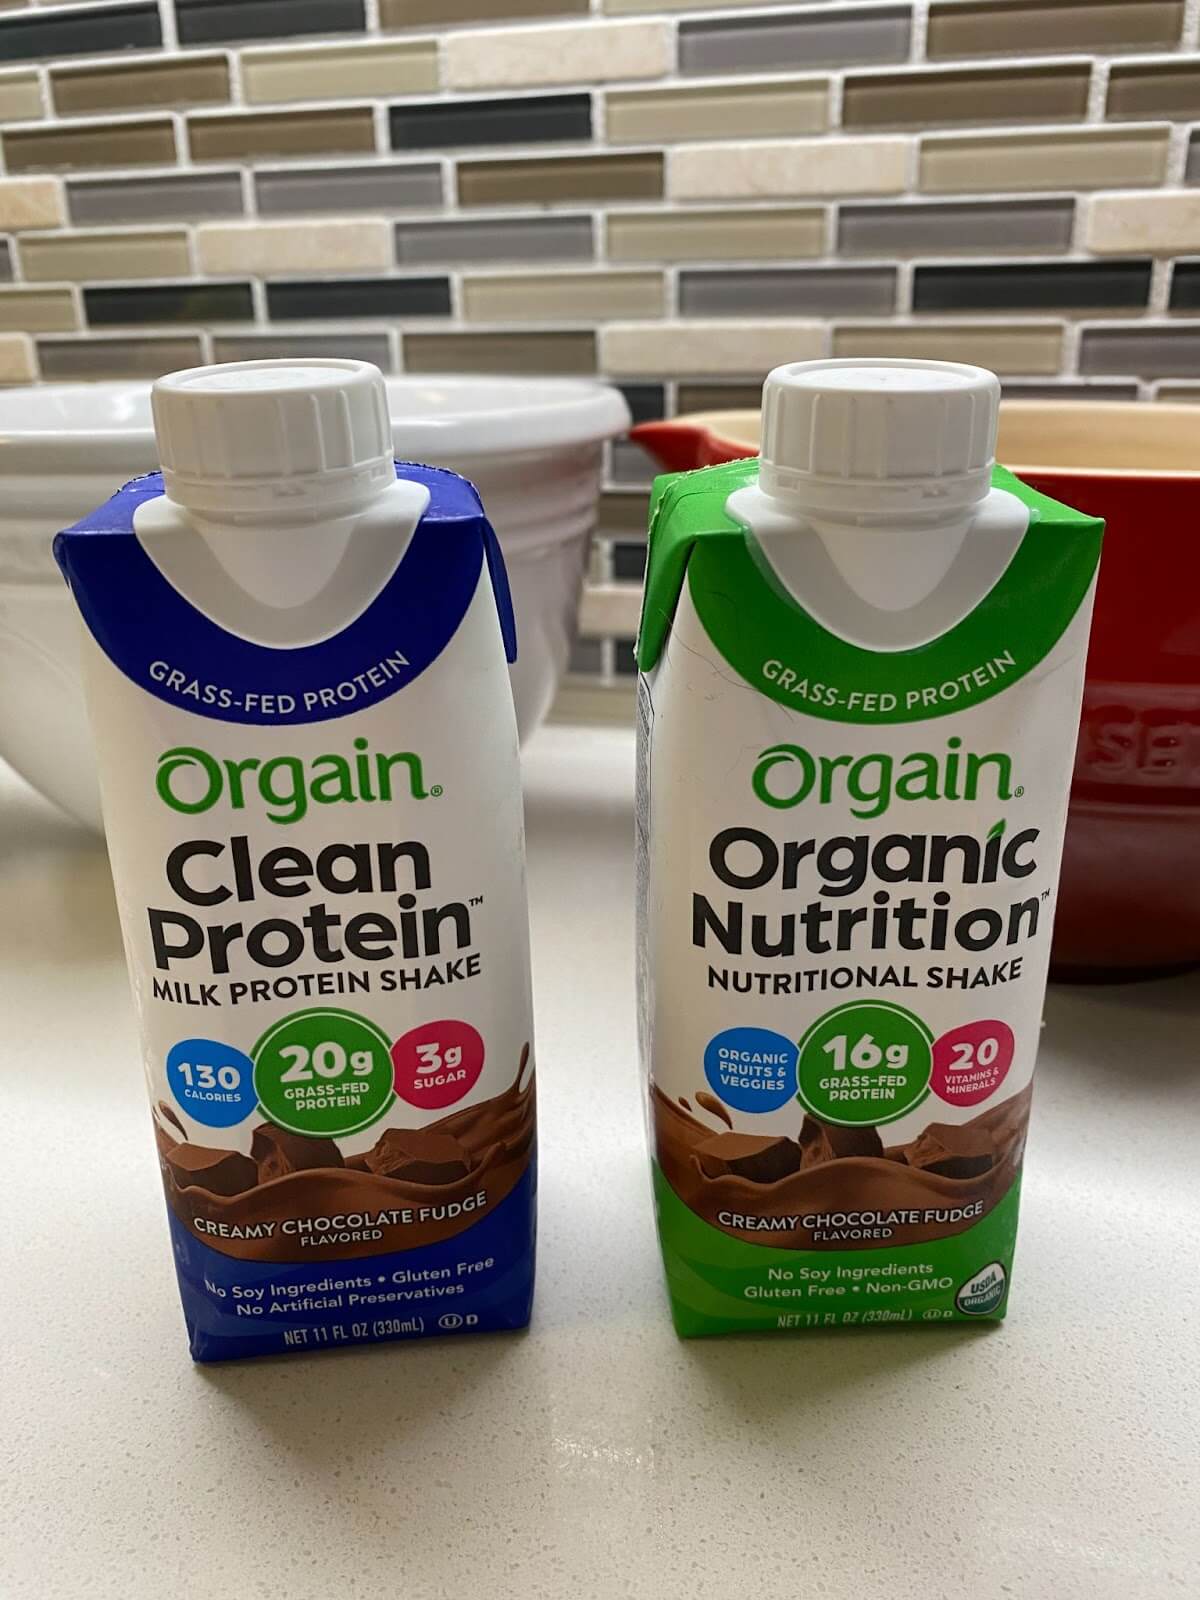 Orgain Clean Protein Milk Protein Shake and Orgain Porganic Nutrition Nutritional Shake